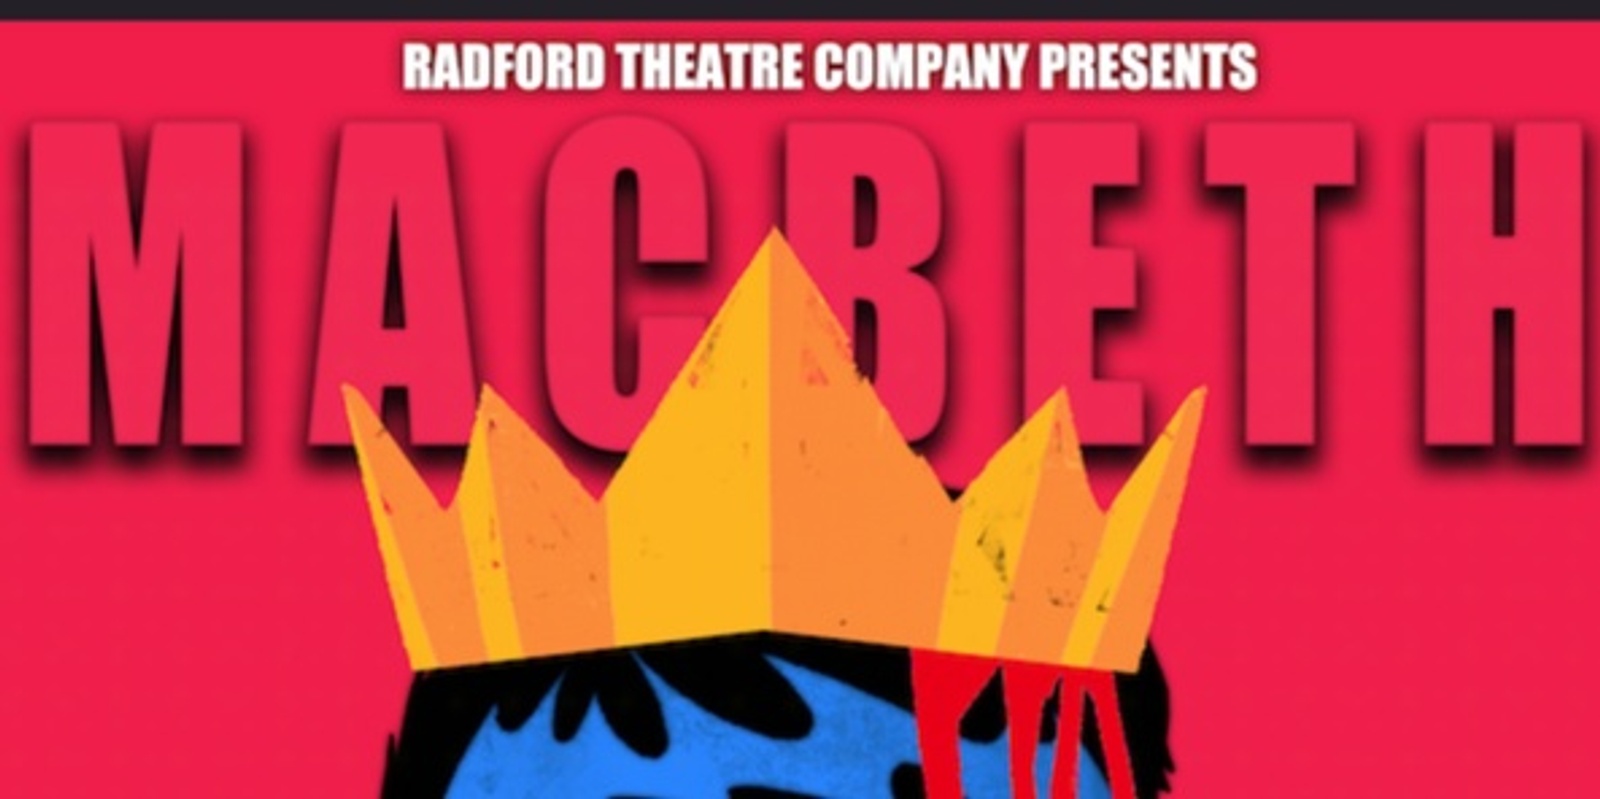 Banner image for Macbeth Senior Drama Production